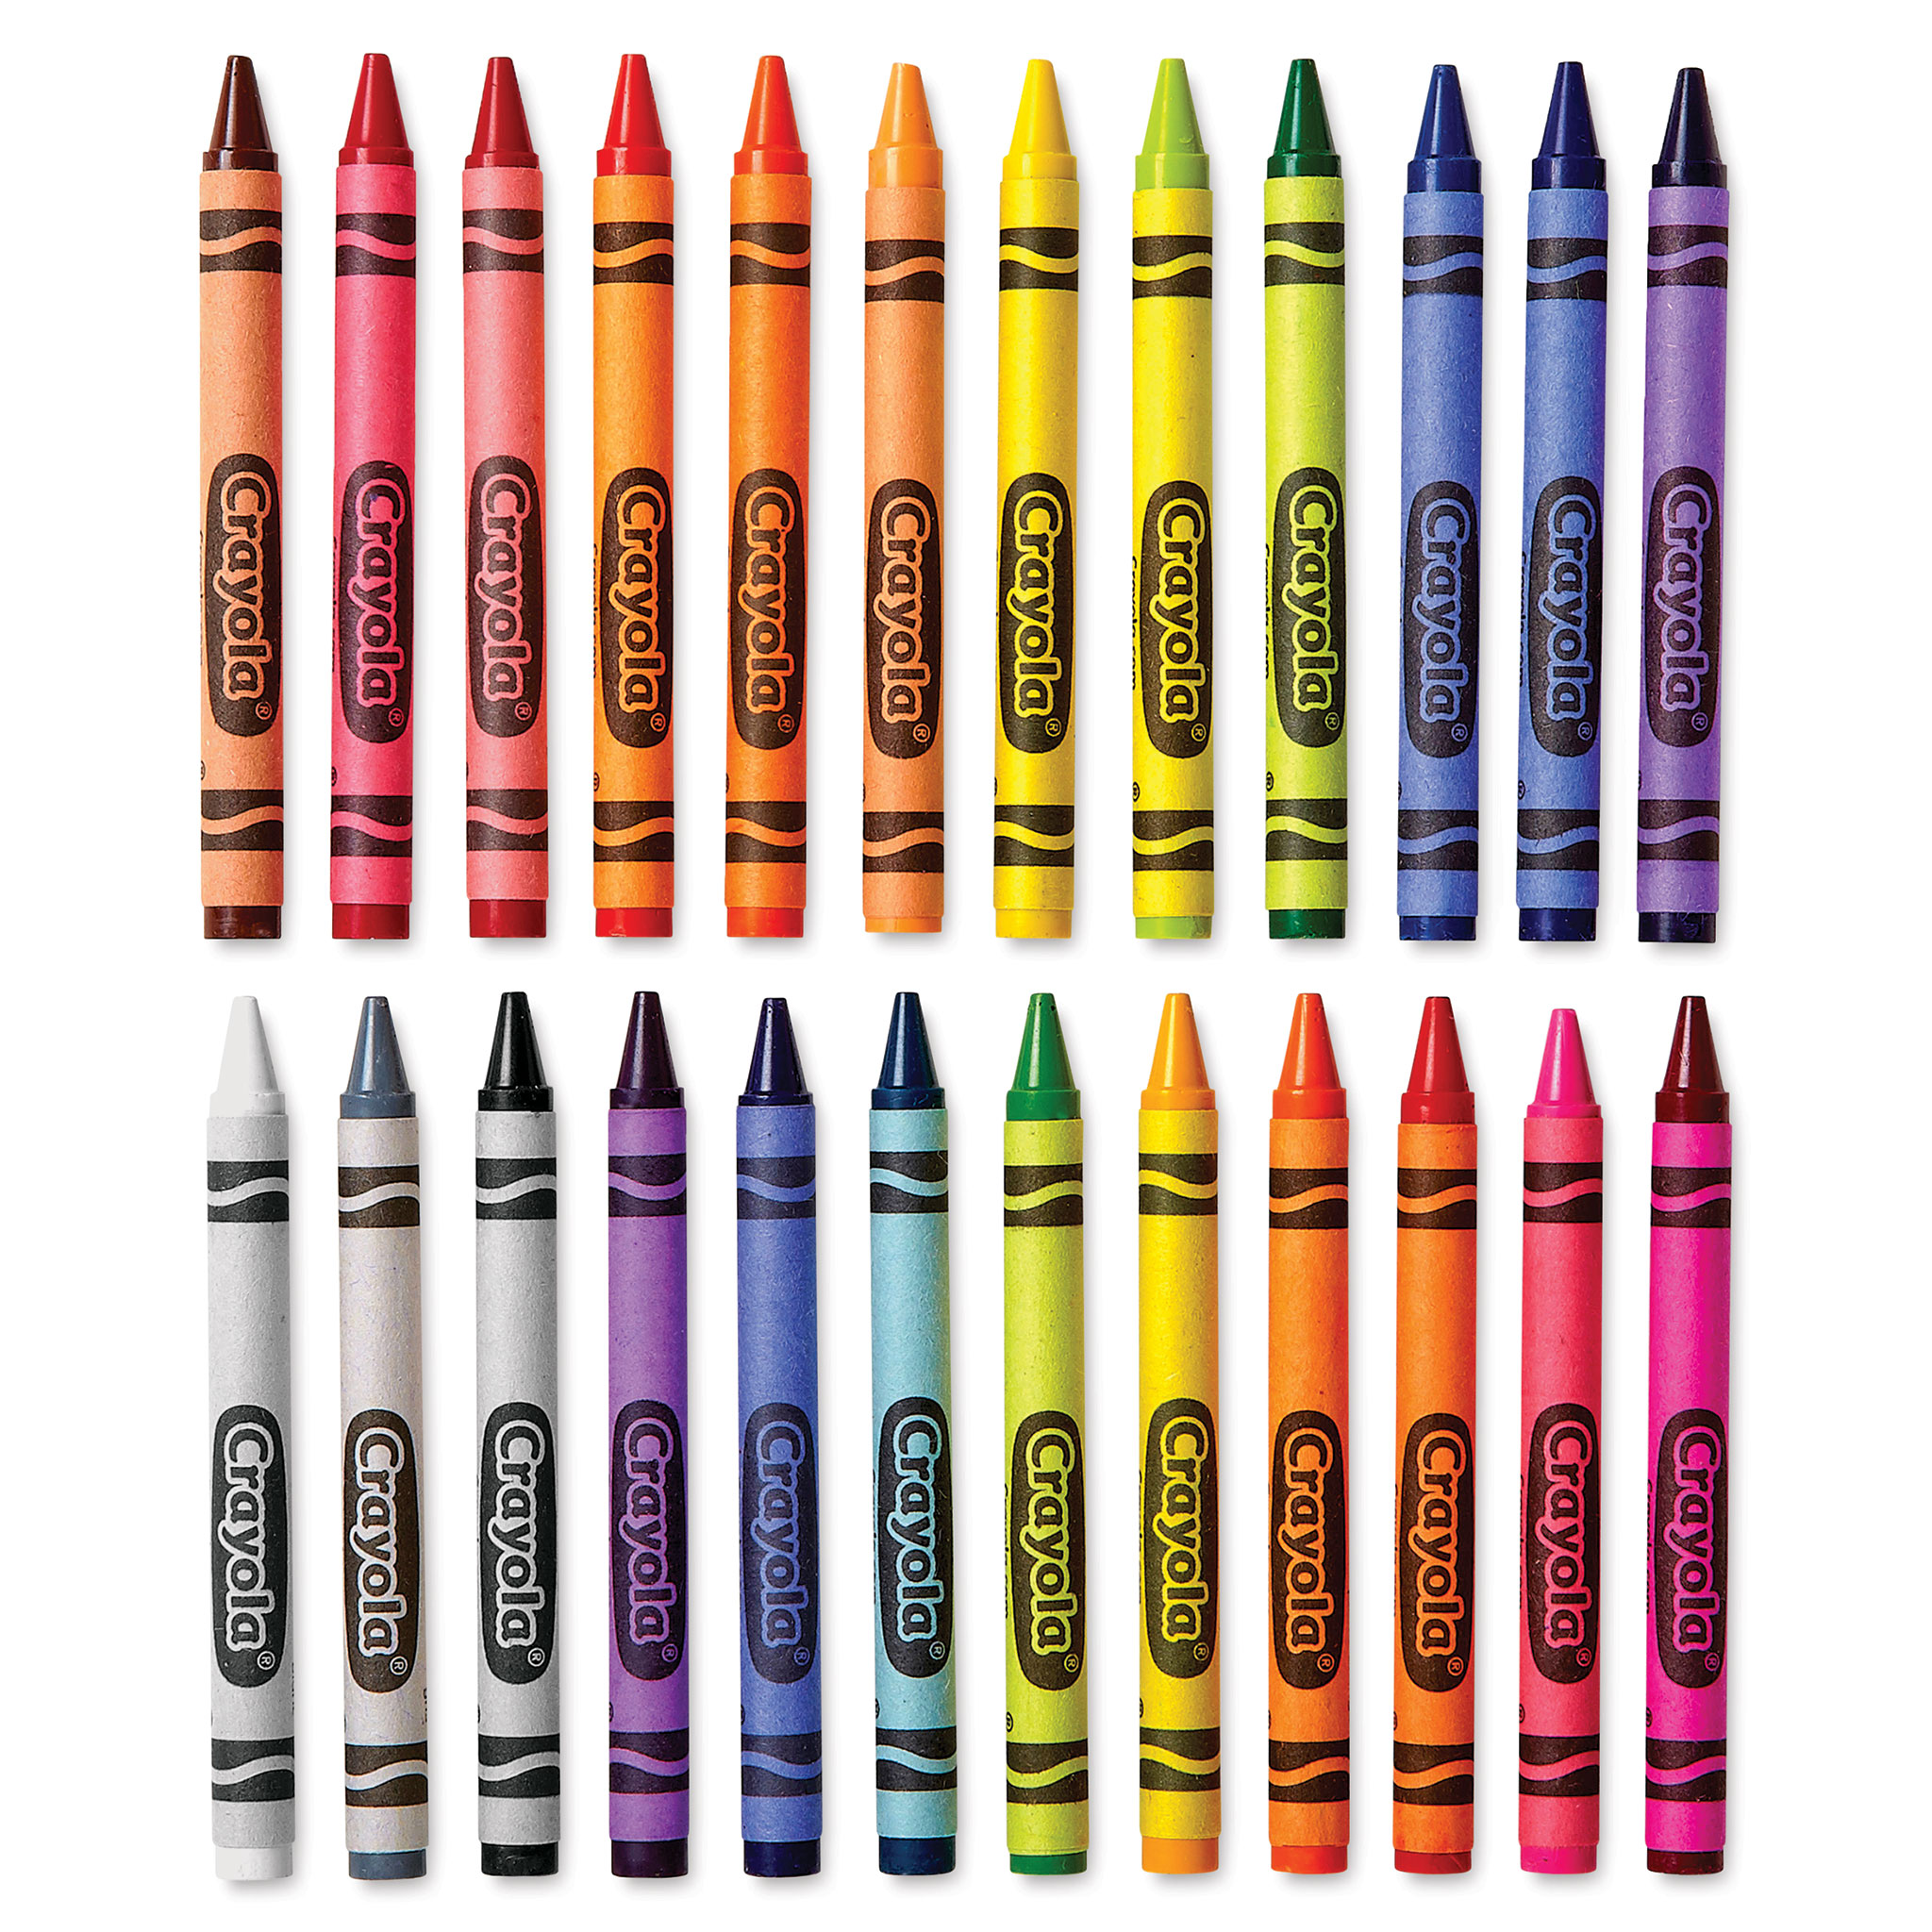 Crayola White Crayons-12/Pkg